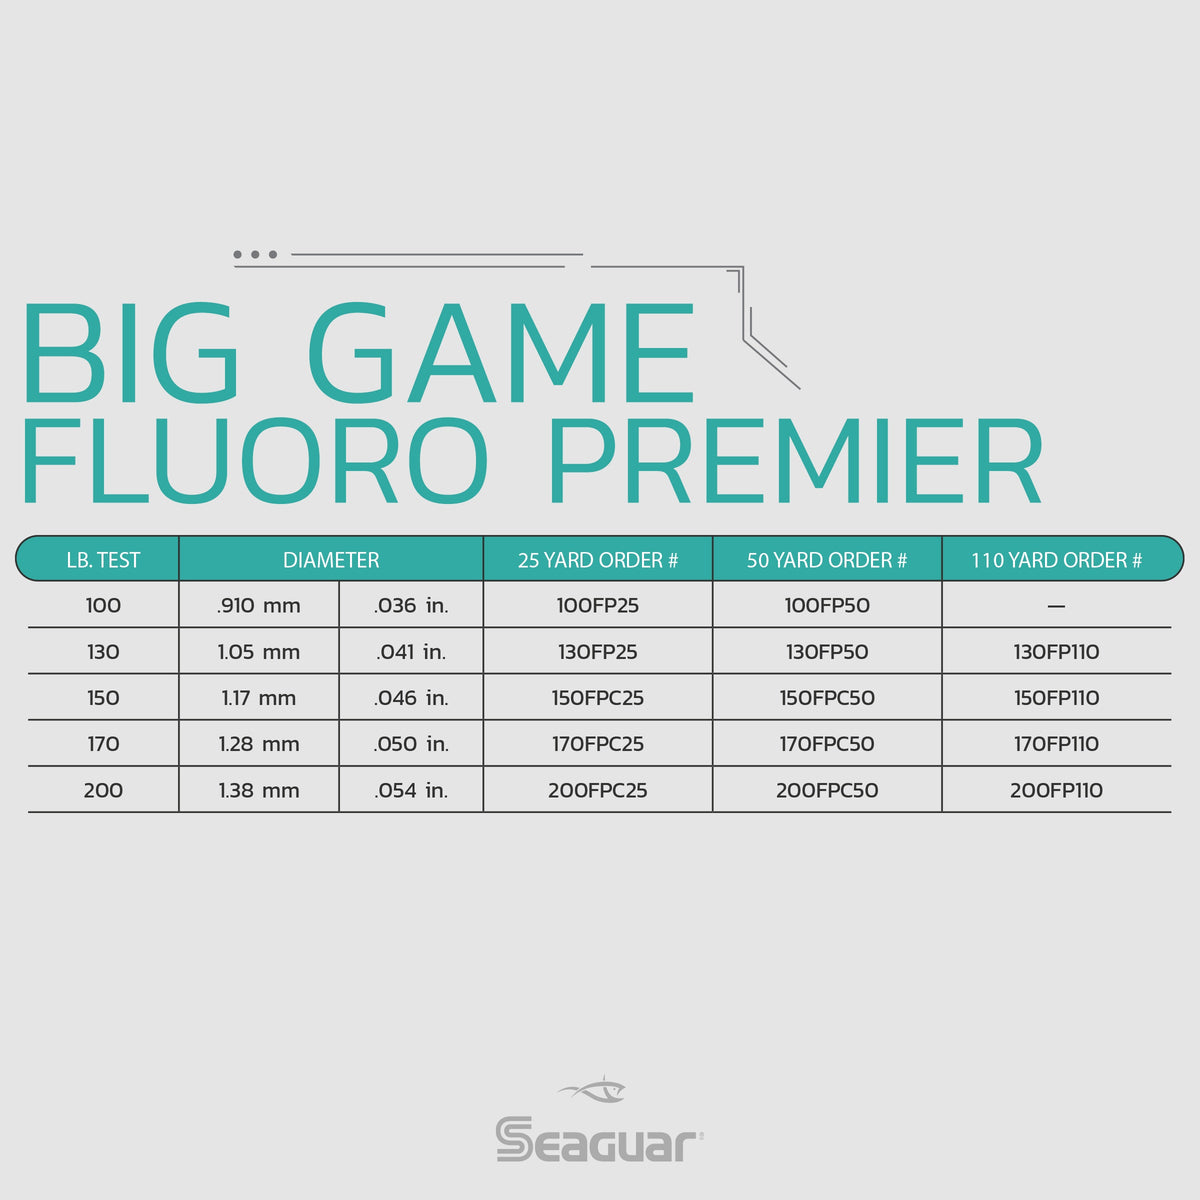 Big Game Fluoro Premier